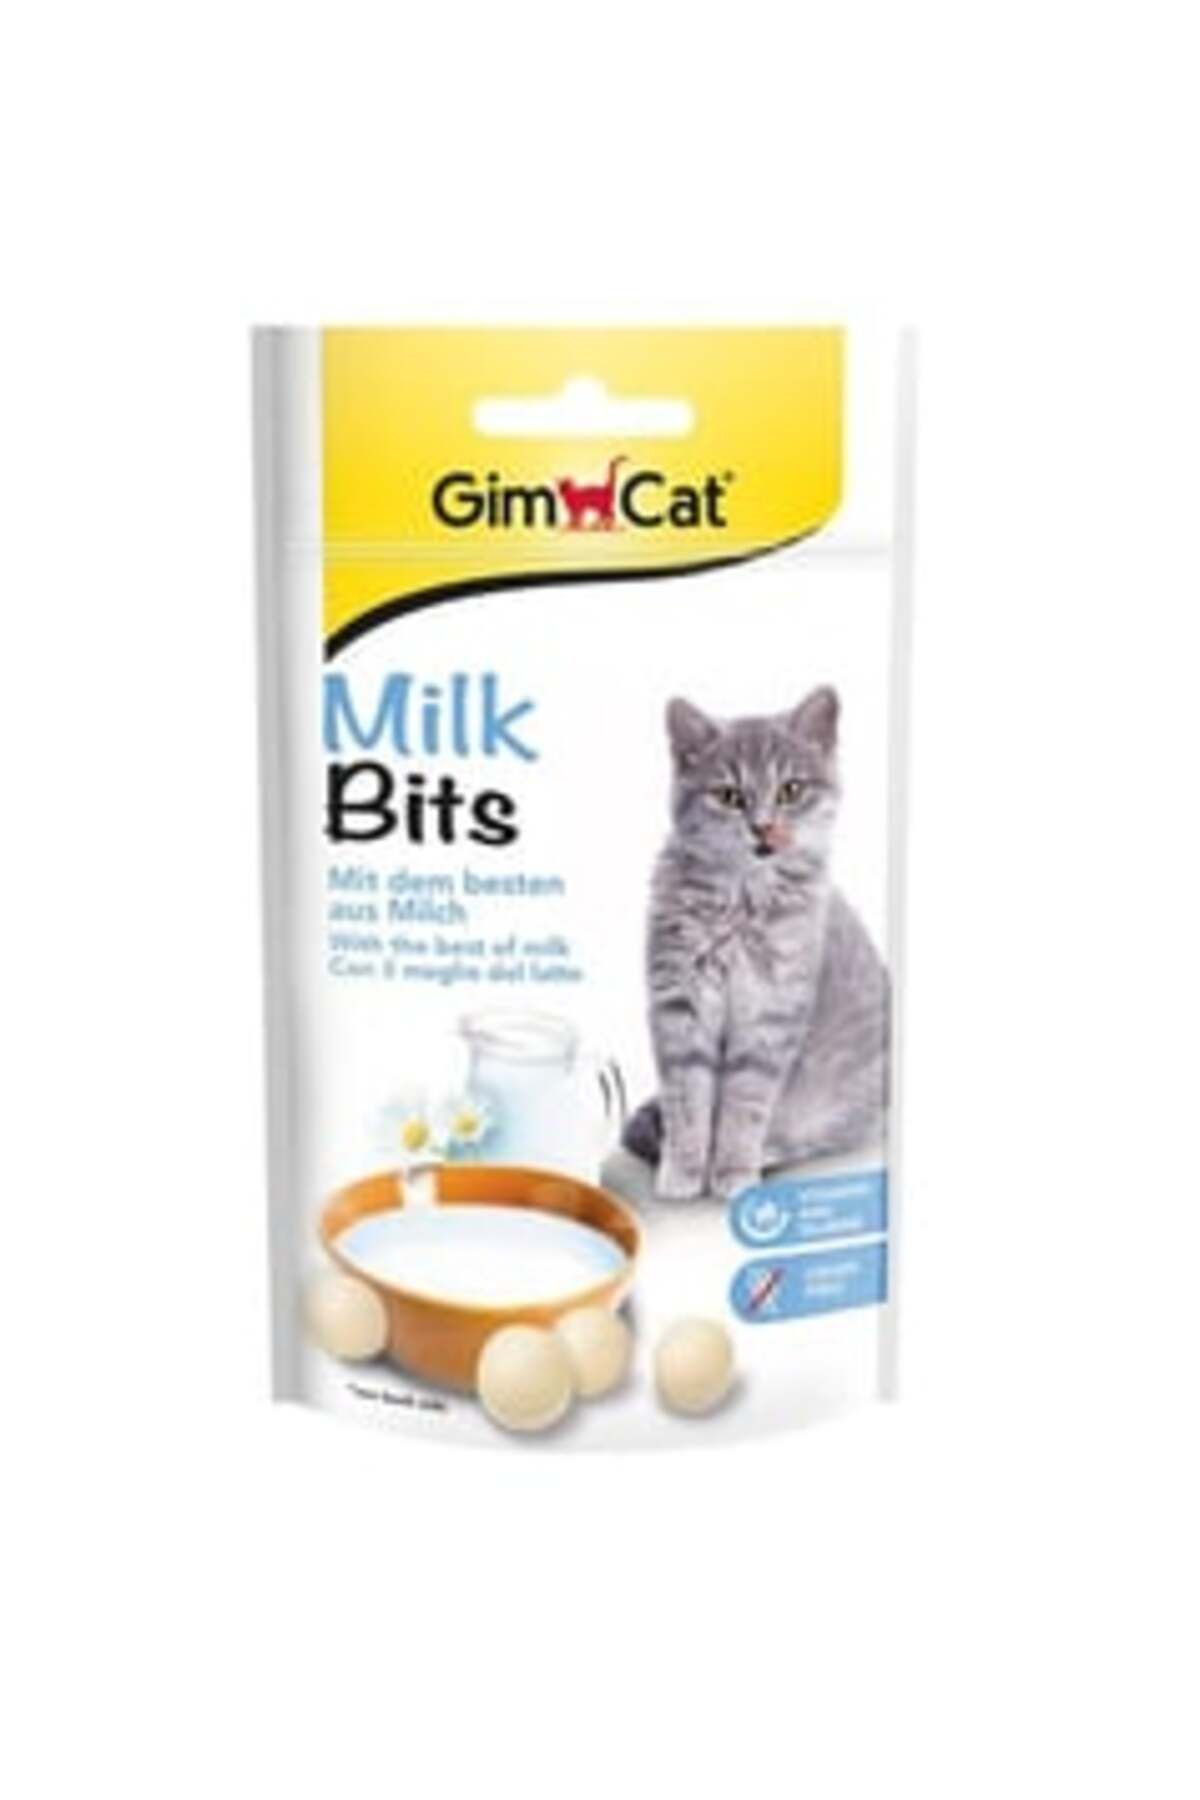 Gimcat Milk Bits Sütlü Kedi Ödül Maması Tablet ( 1 ADET )